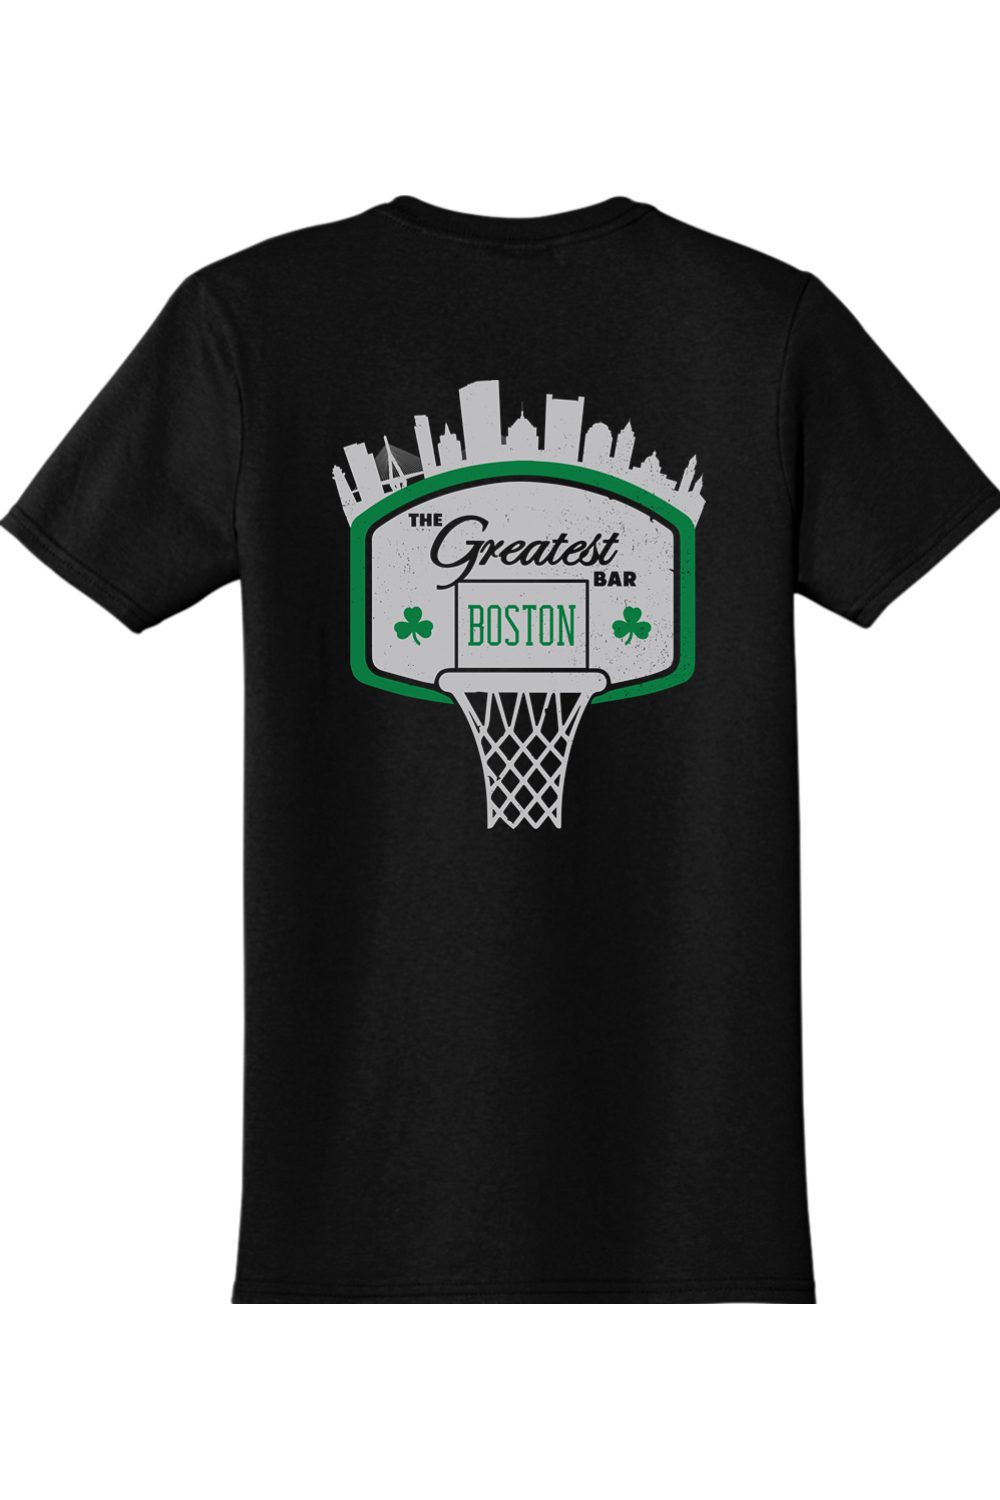 The Greatest Bar Basketball T-Shirt